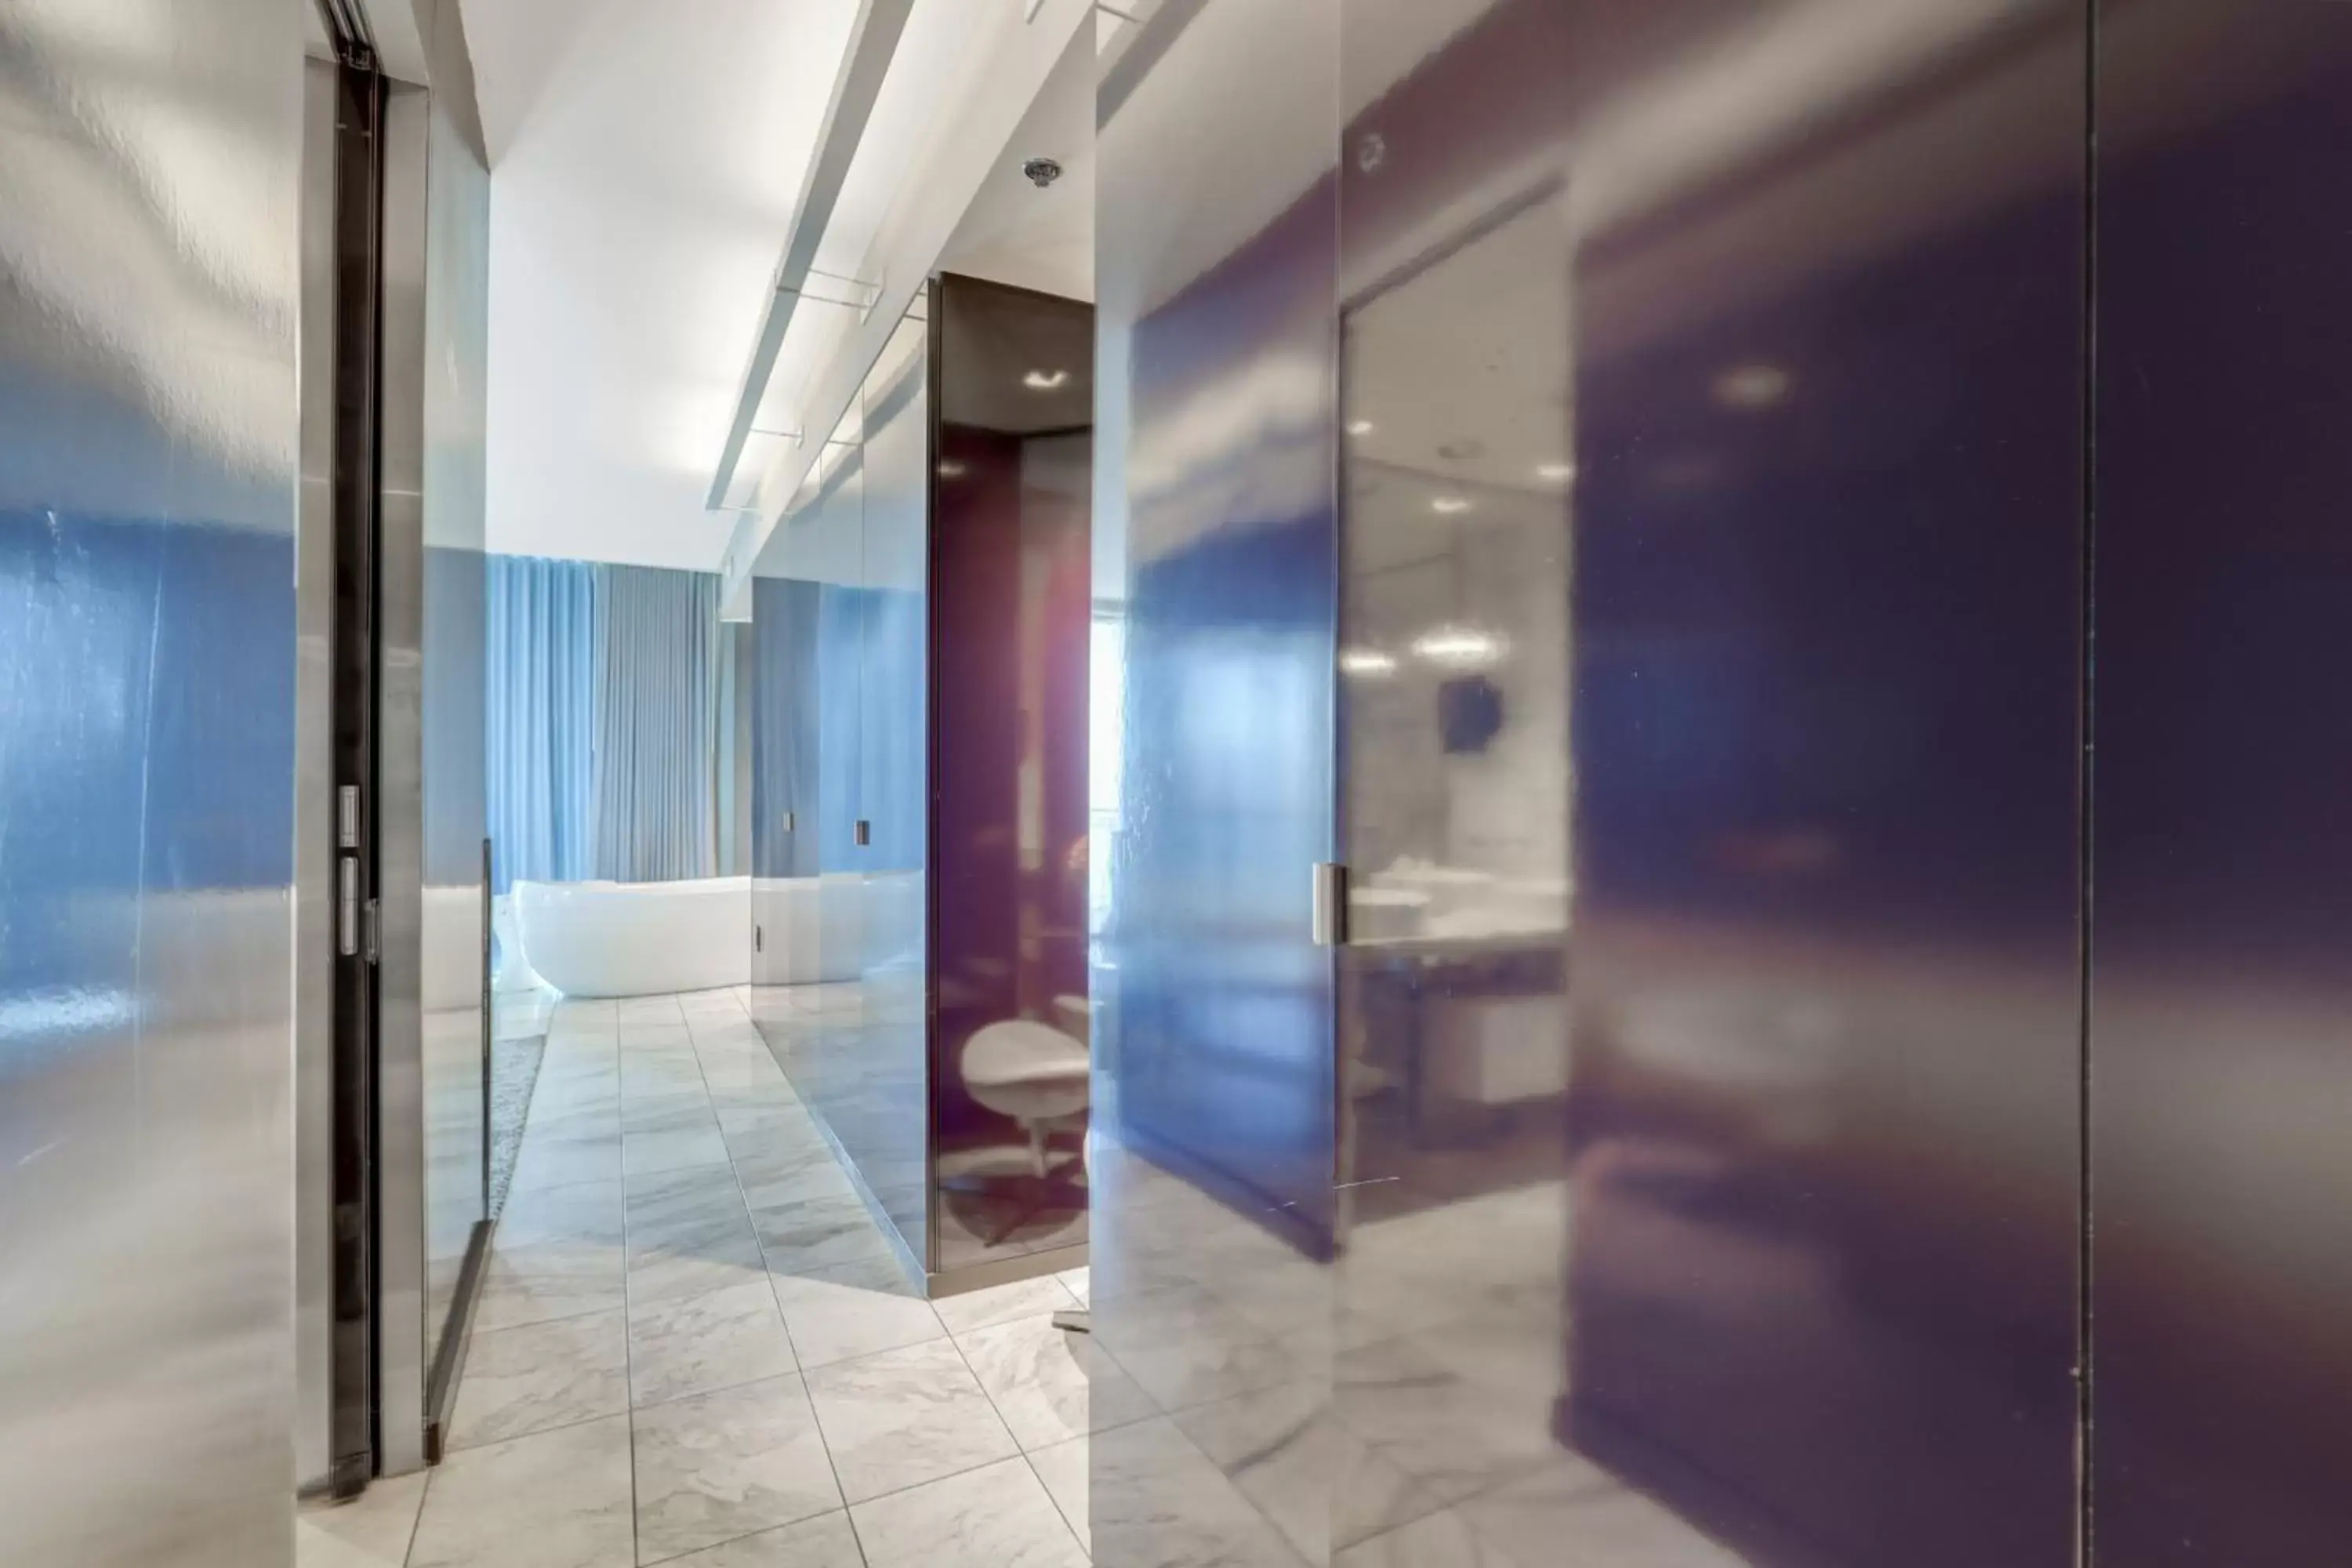 Bathroom, Swimming Pool in Vegas Palms HIGH 52nd fl. 1BDR corner penthouse 1220sqft